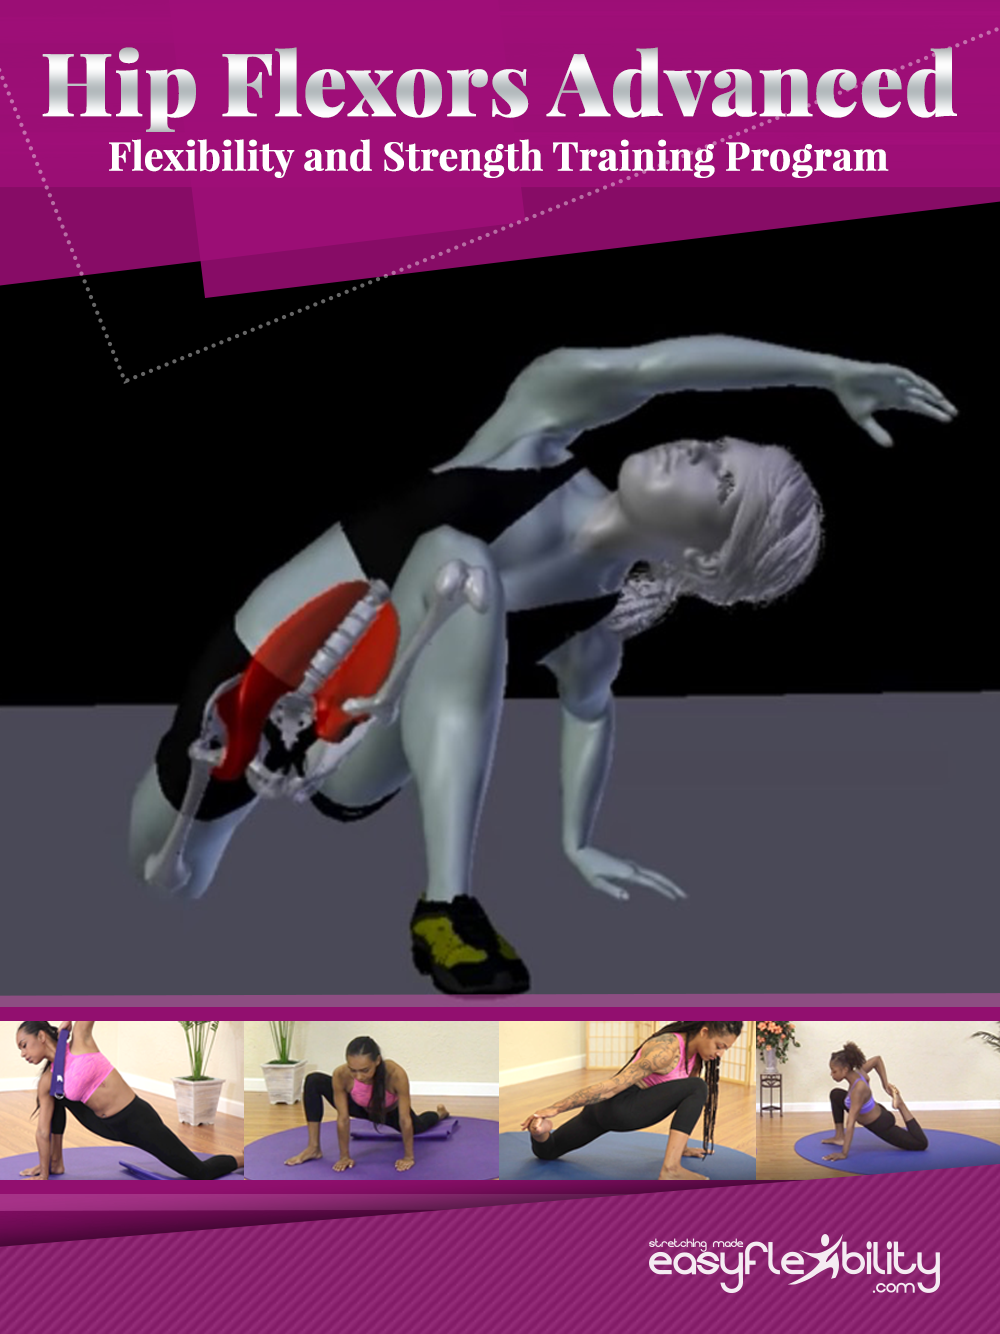 How to Stretch Hip Flexors - Your Step by Step Hip Flexor Pilates Stretch  Guide with Video! - Complete Pilates